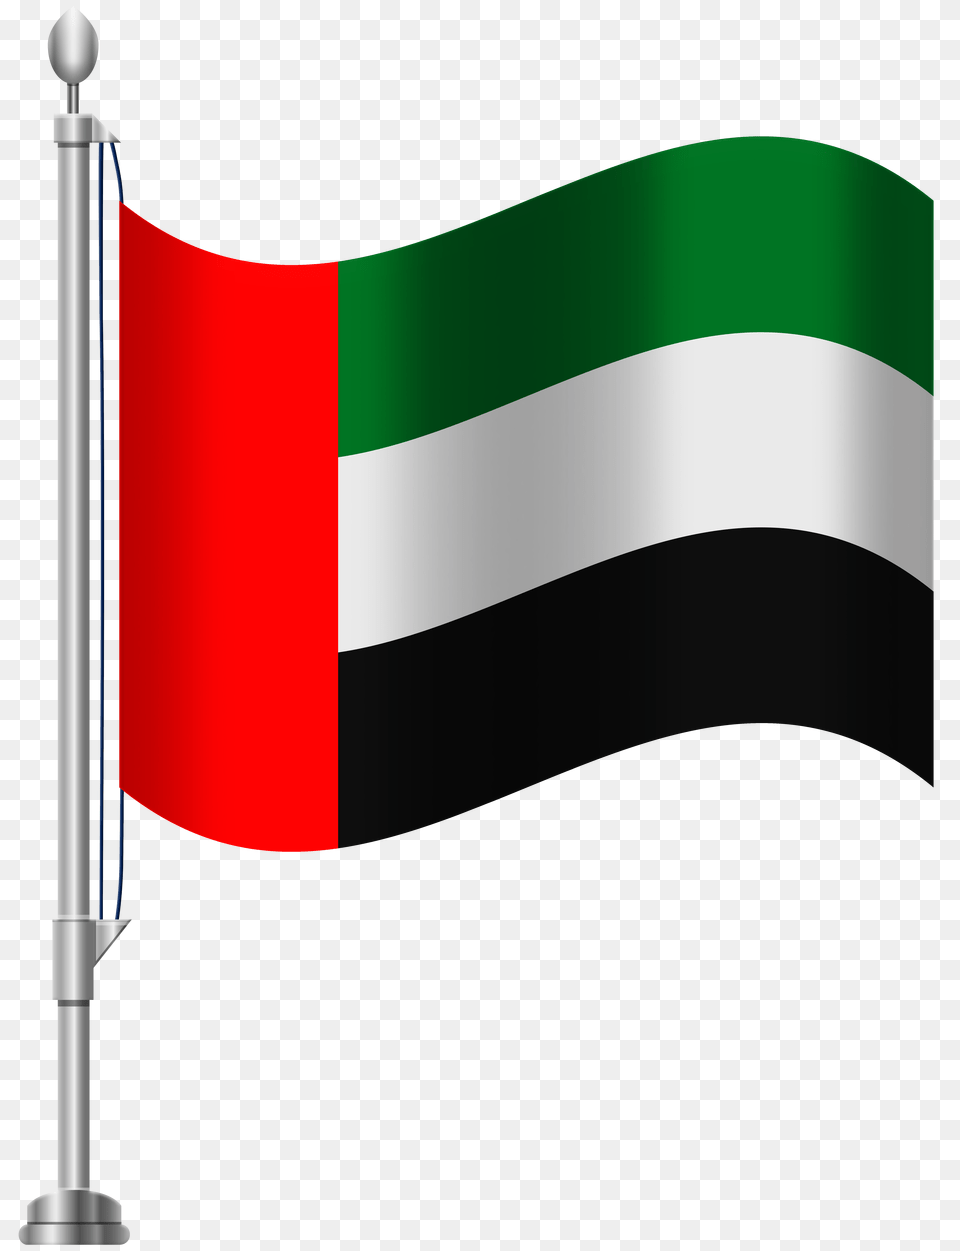 United Arab Emirates Flag Clip Art Clipart House, Smoke Pipe, United Arab Emirates Flag Png Image